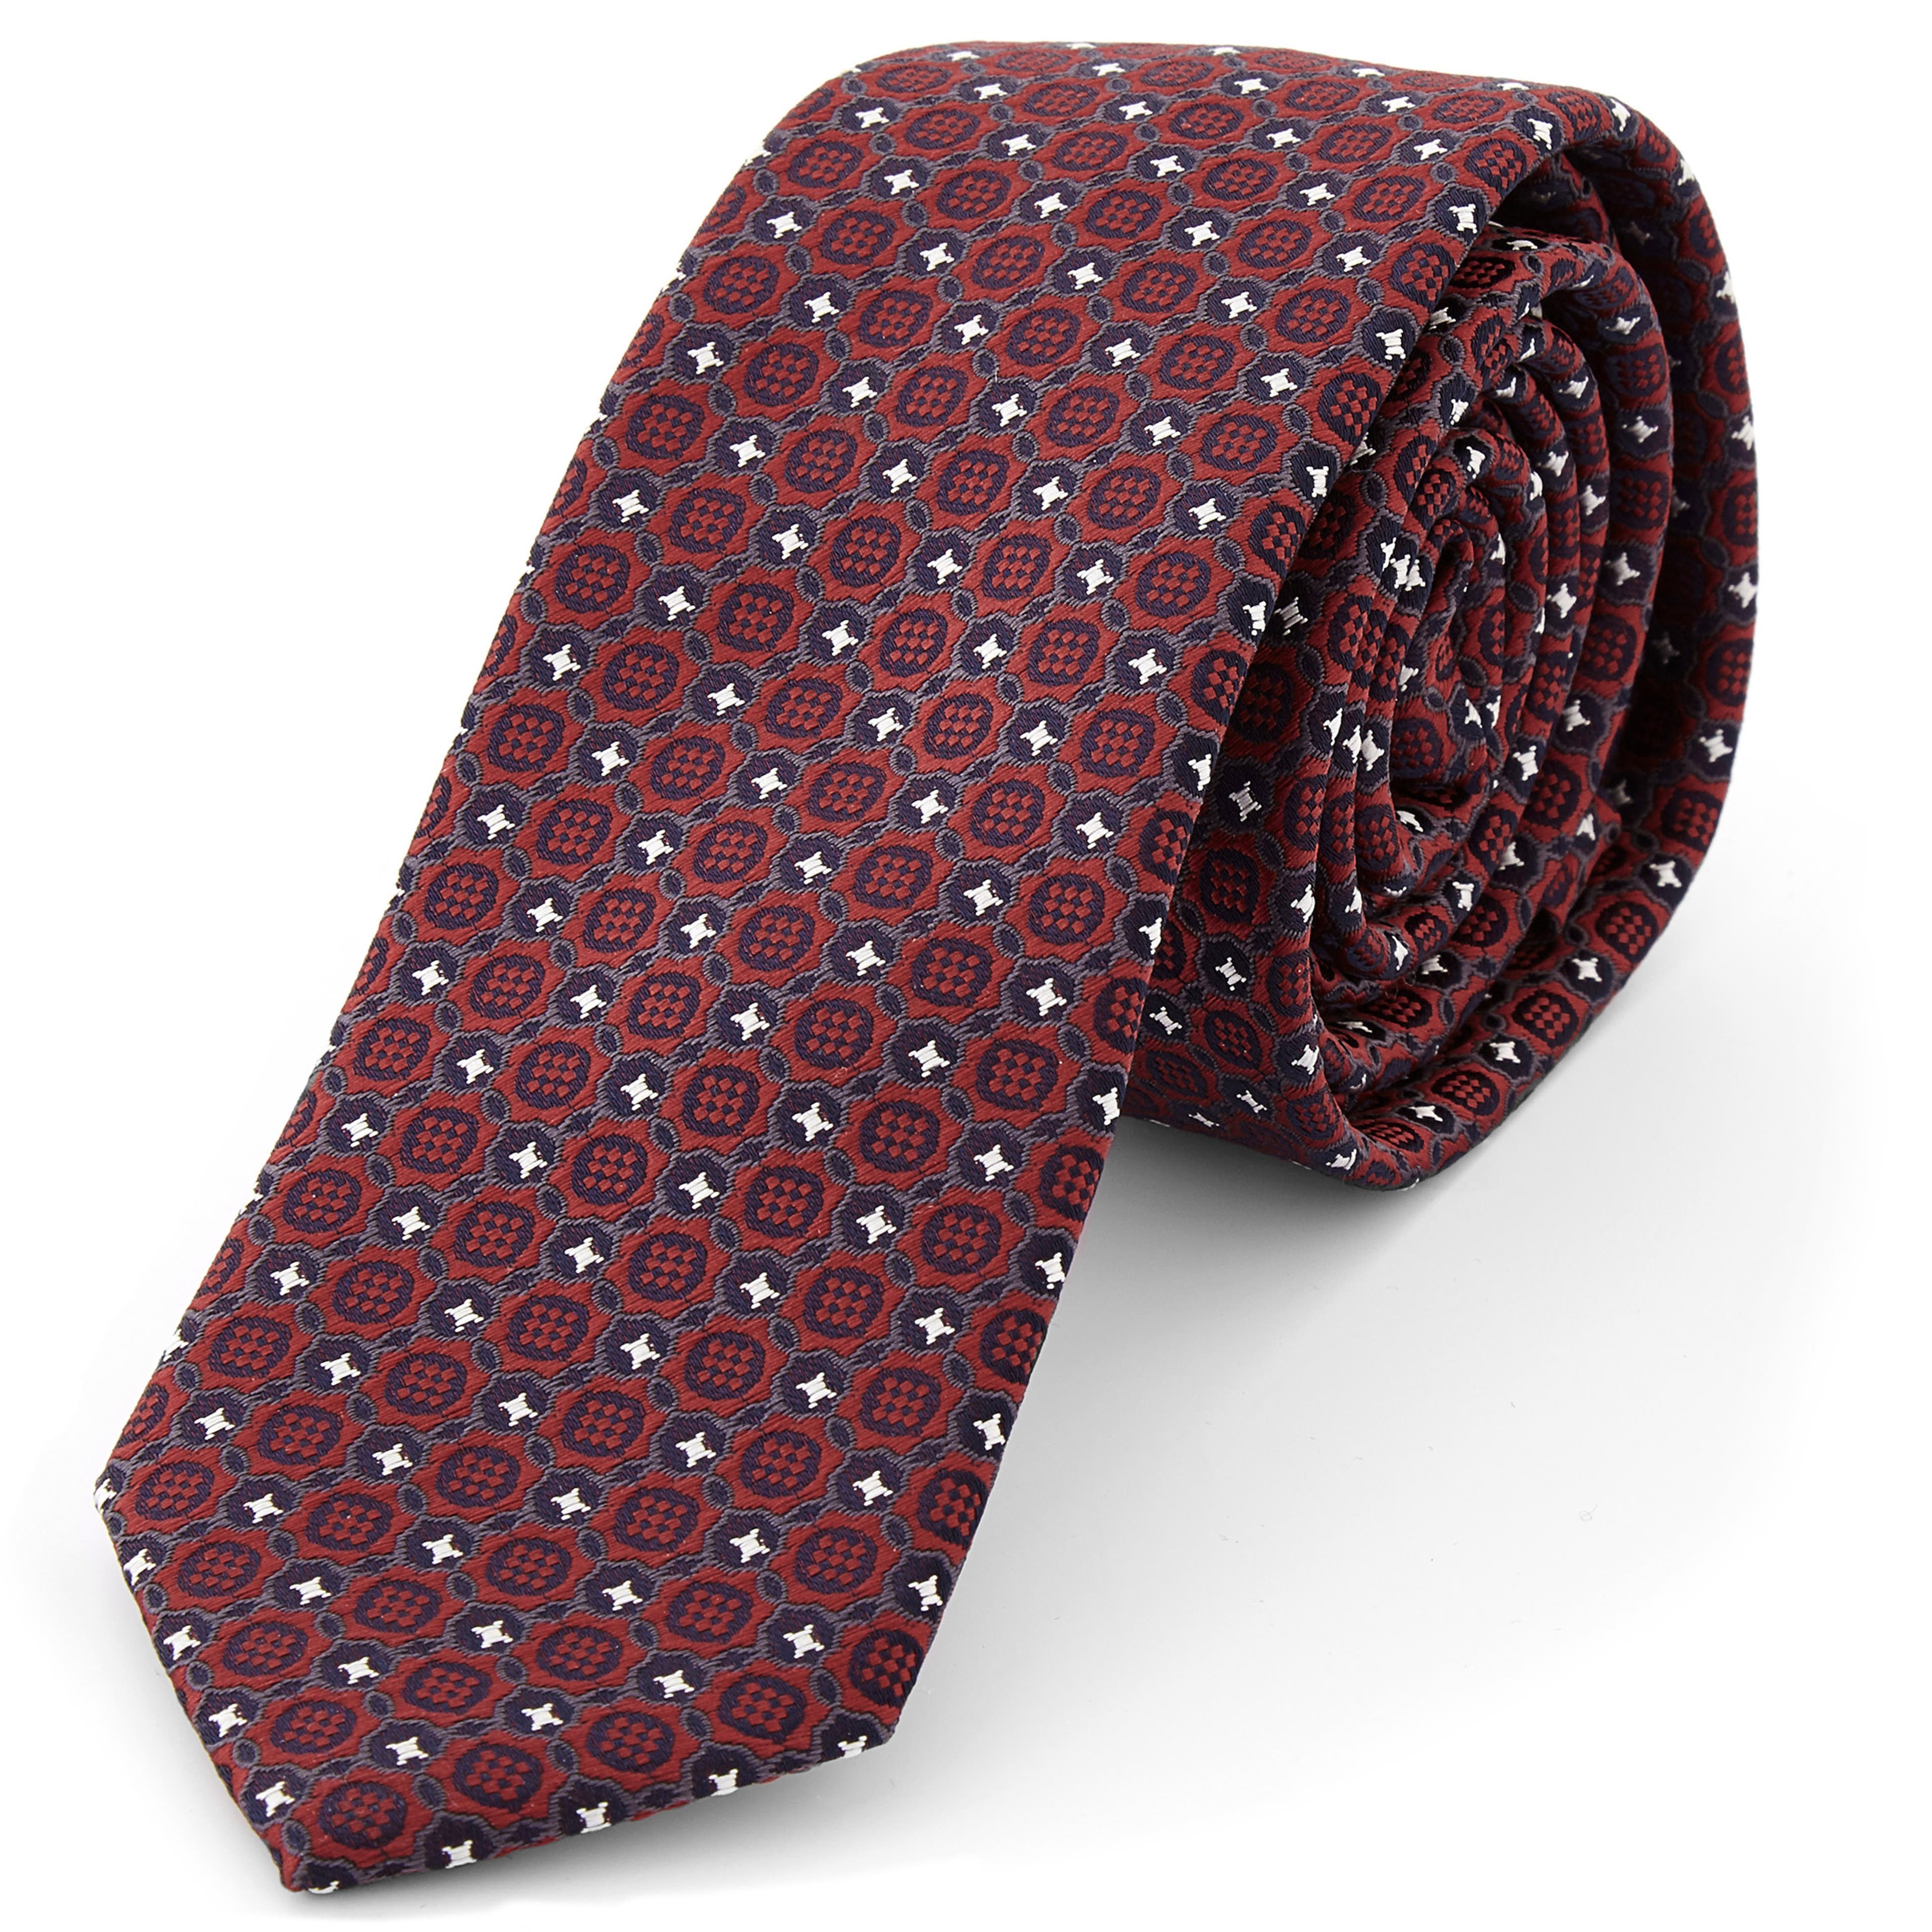 Mahagonifarbene Krawatte